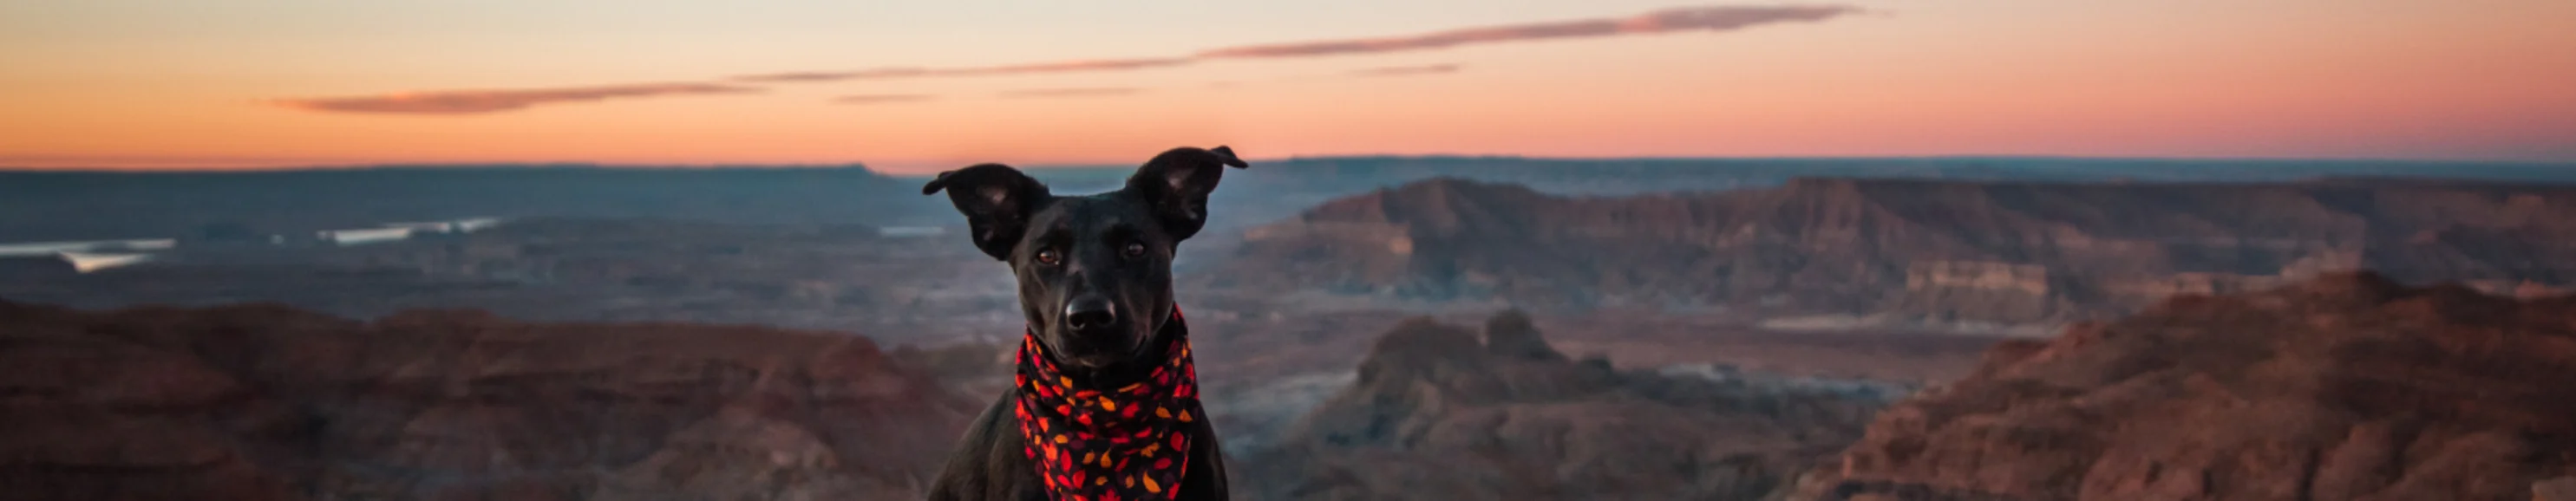 Dog sitting on edge of mesa overlooking canyons at dusk